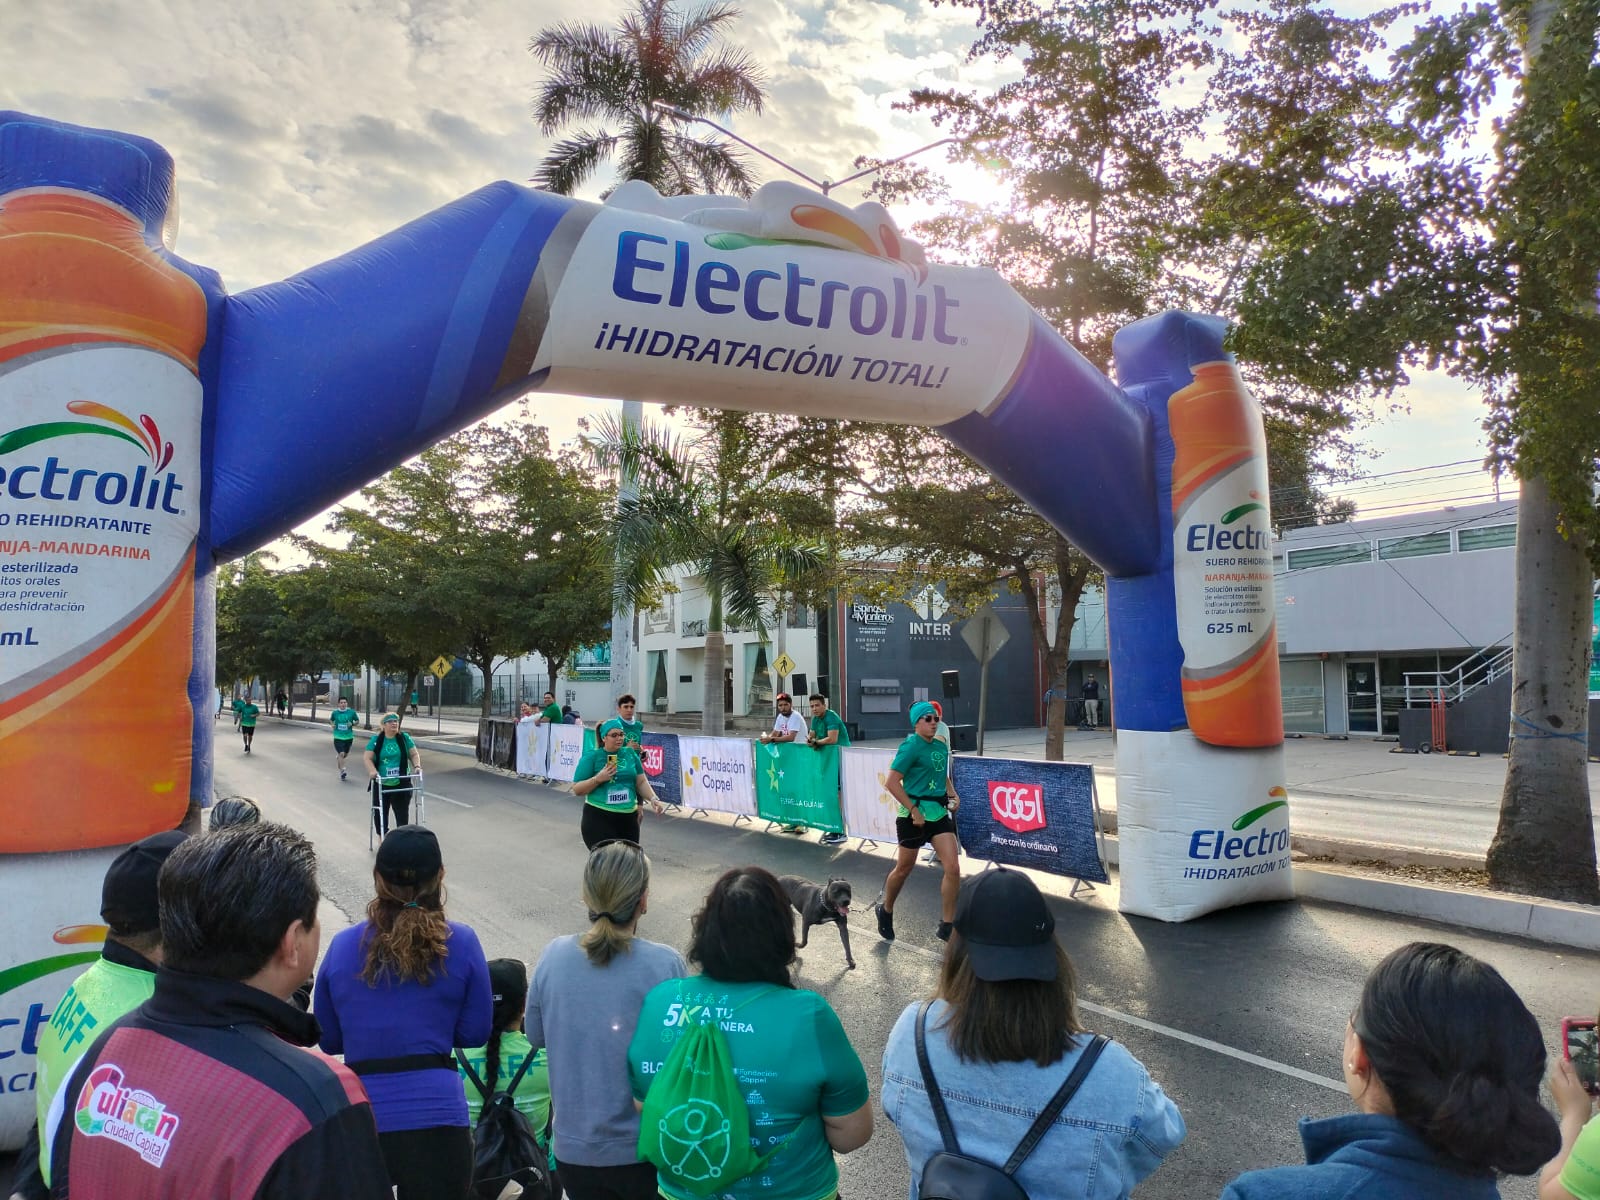 ¡5K a tu manera! Una carrera inclusiva en Culiacán